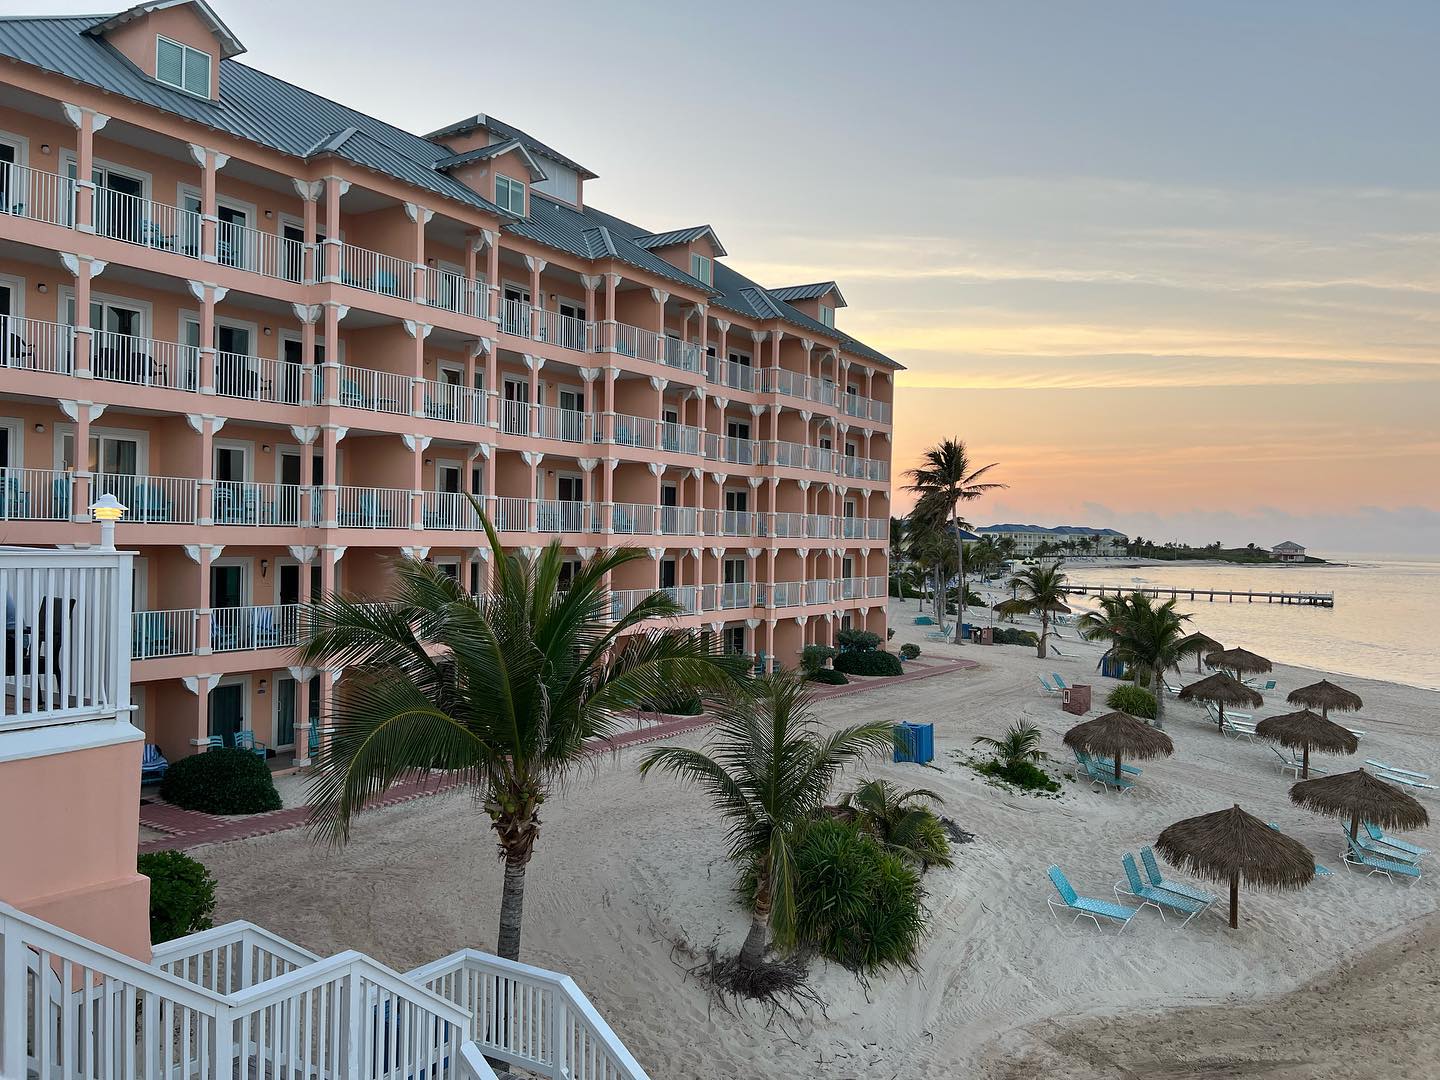 Morritt's Resorts - Vacation Time Sharing Plans